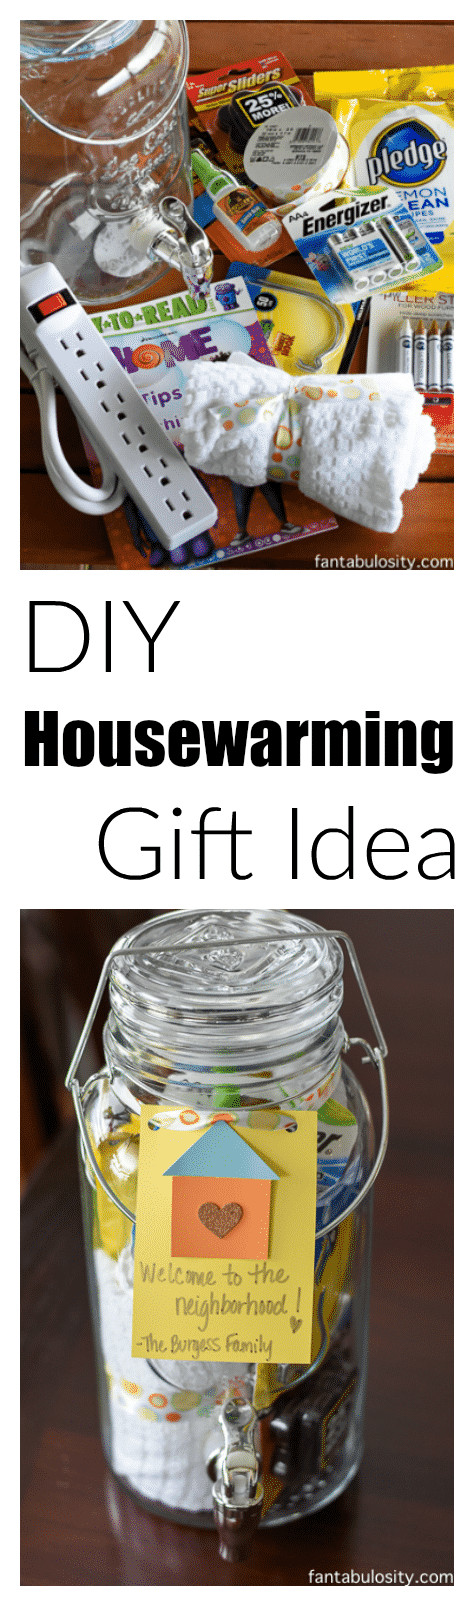 Housewarming Gift DIY
 DIY Housewarming Gift Idea Drink Dispenser Fantabulosity